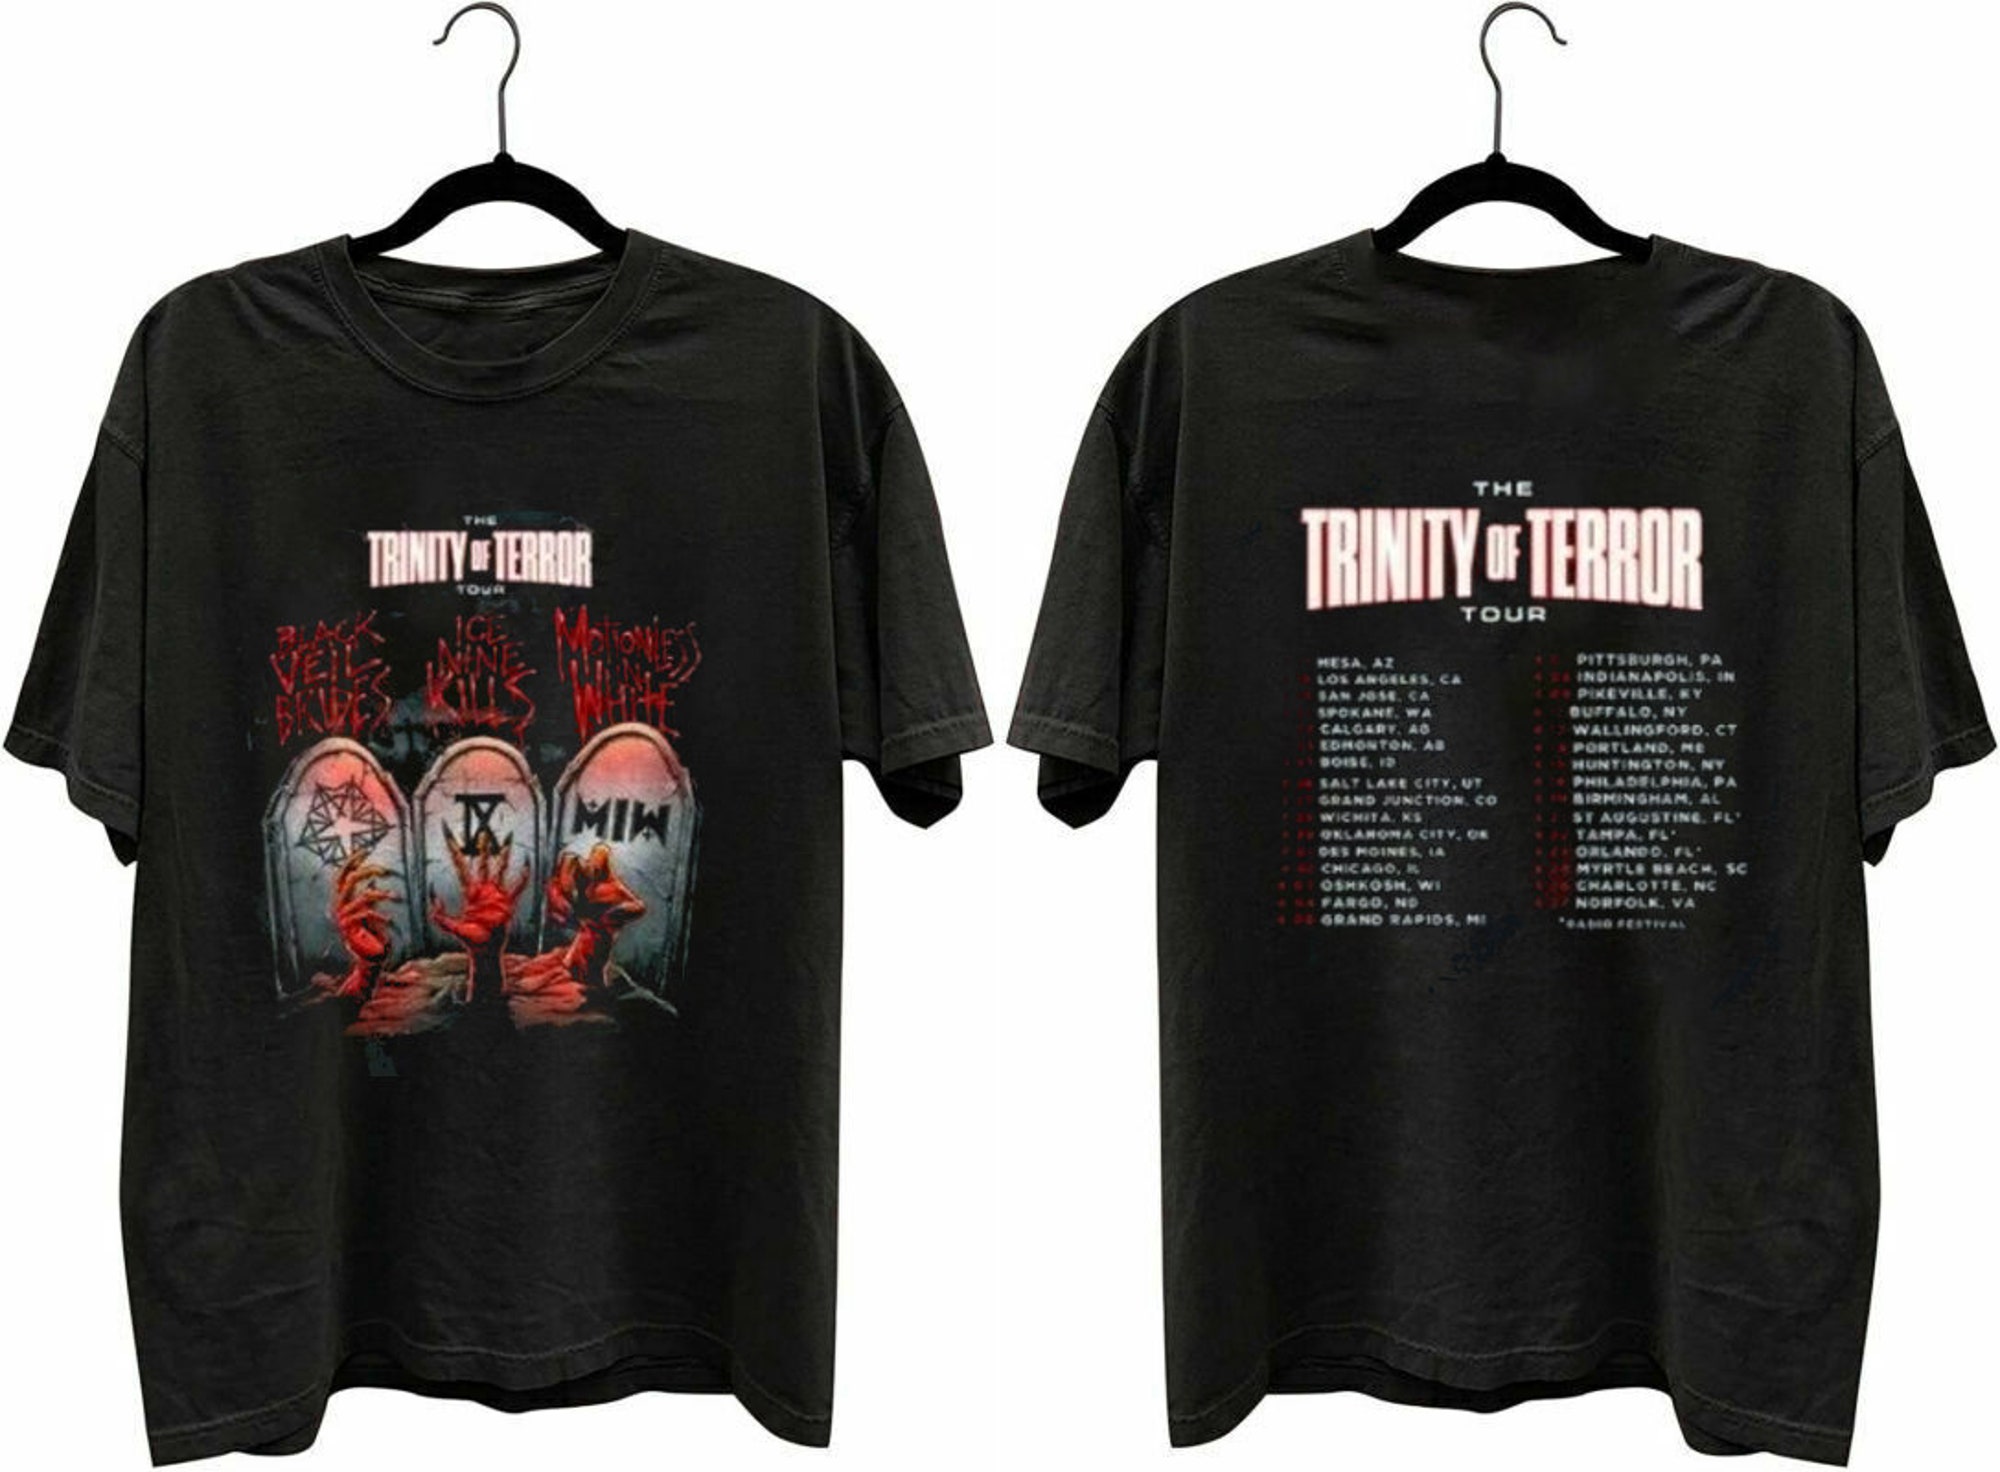 Discover Trinity of Terror Tour 2022 T-Shirt